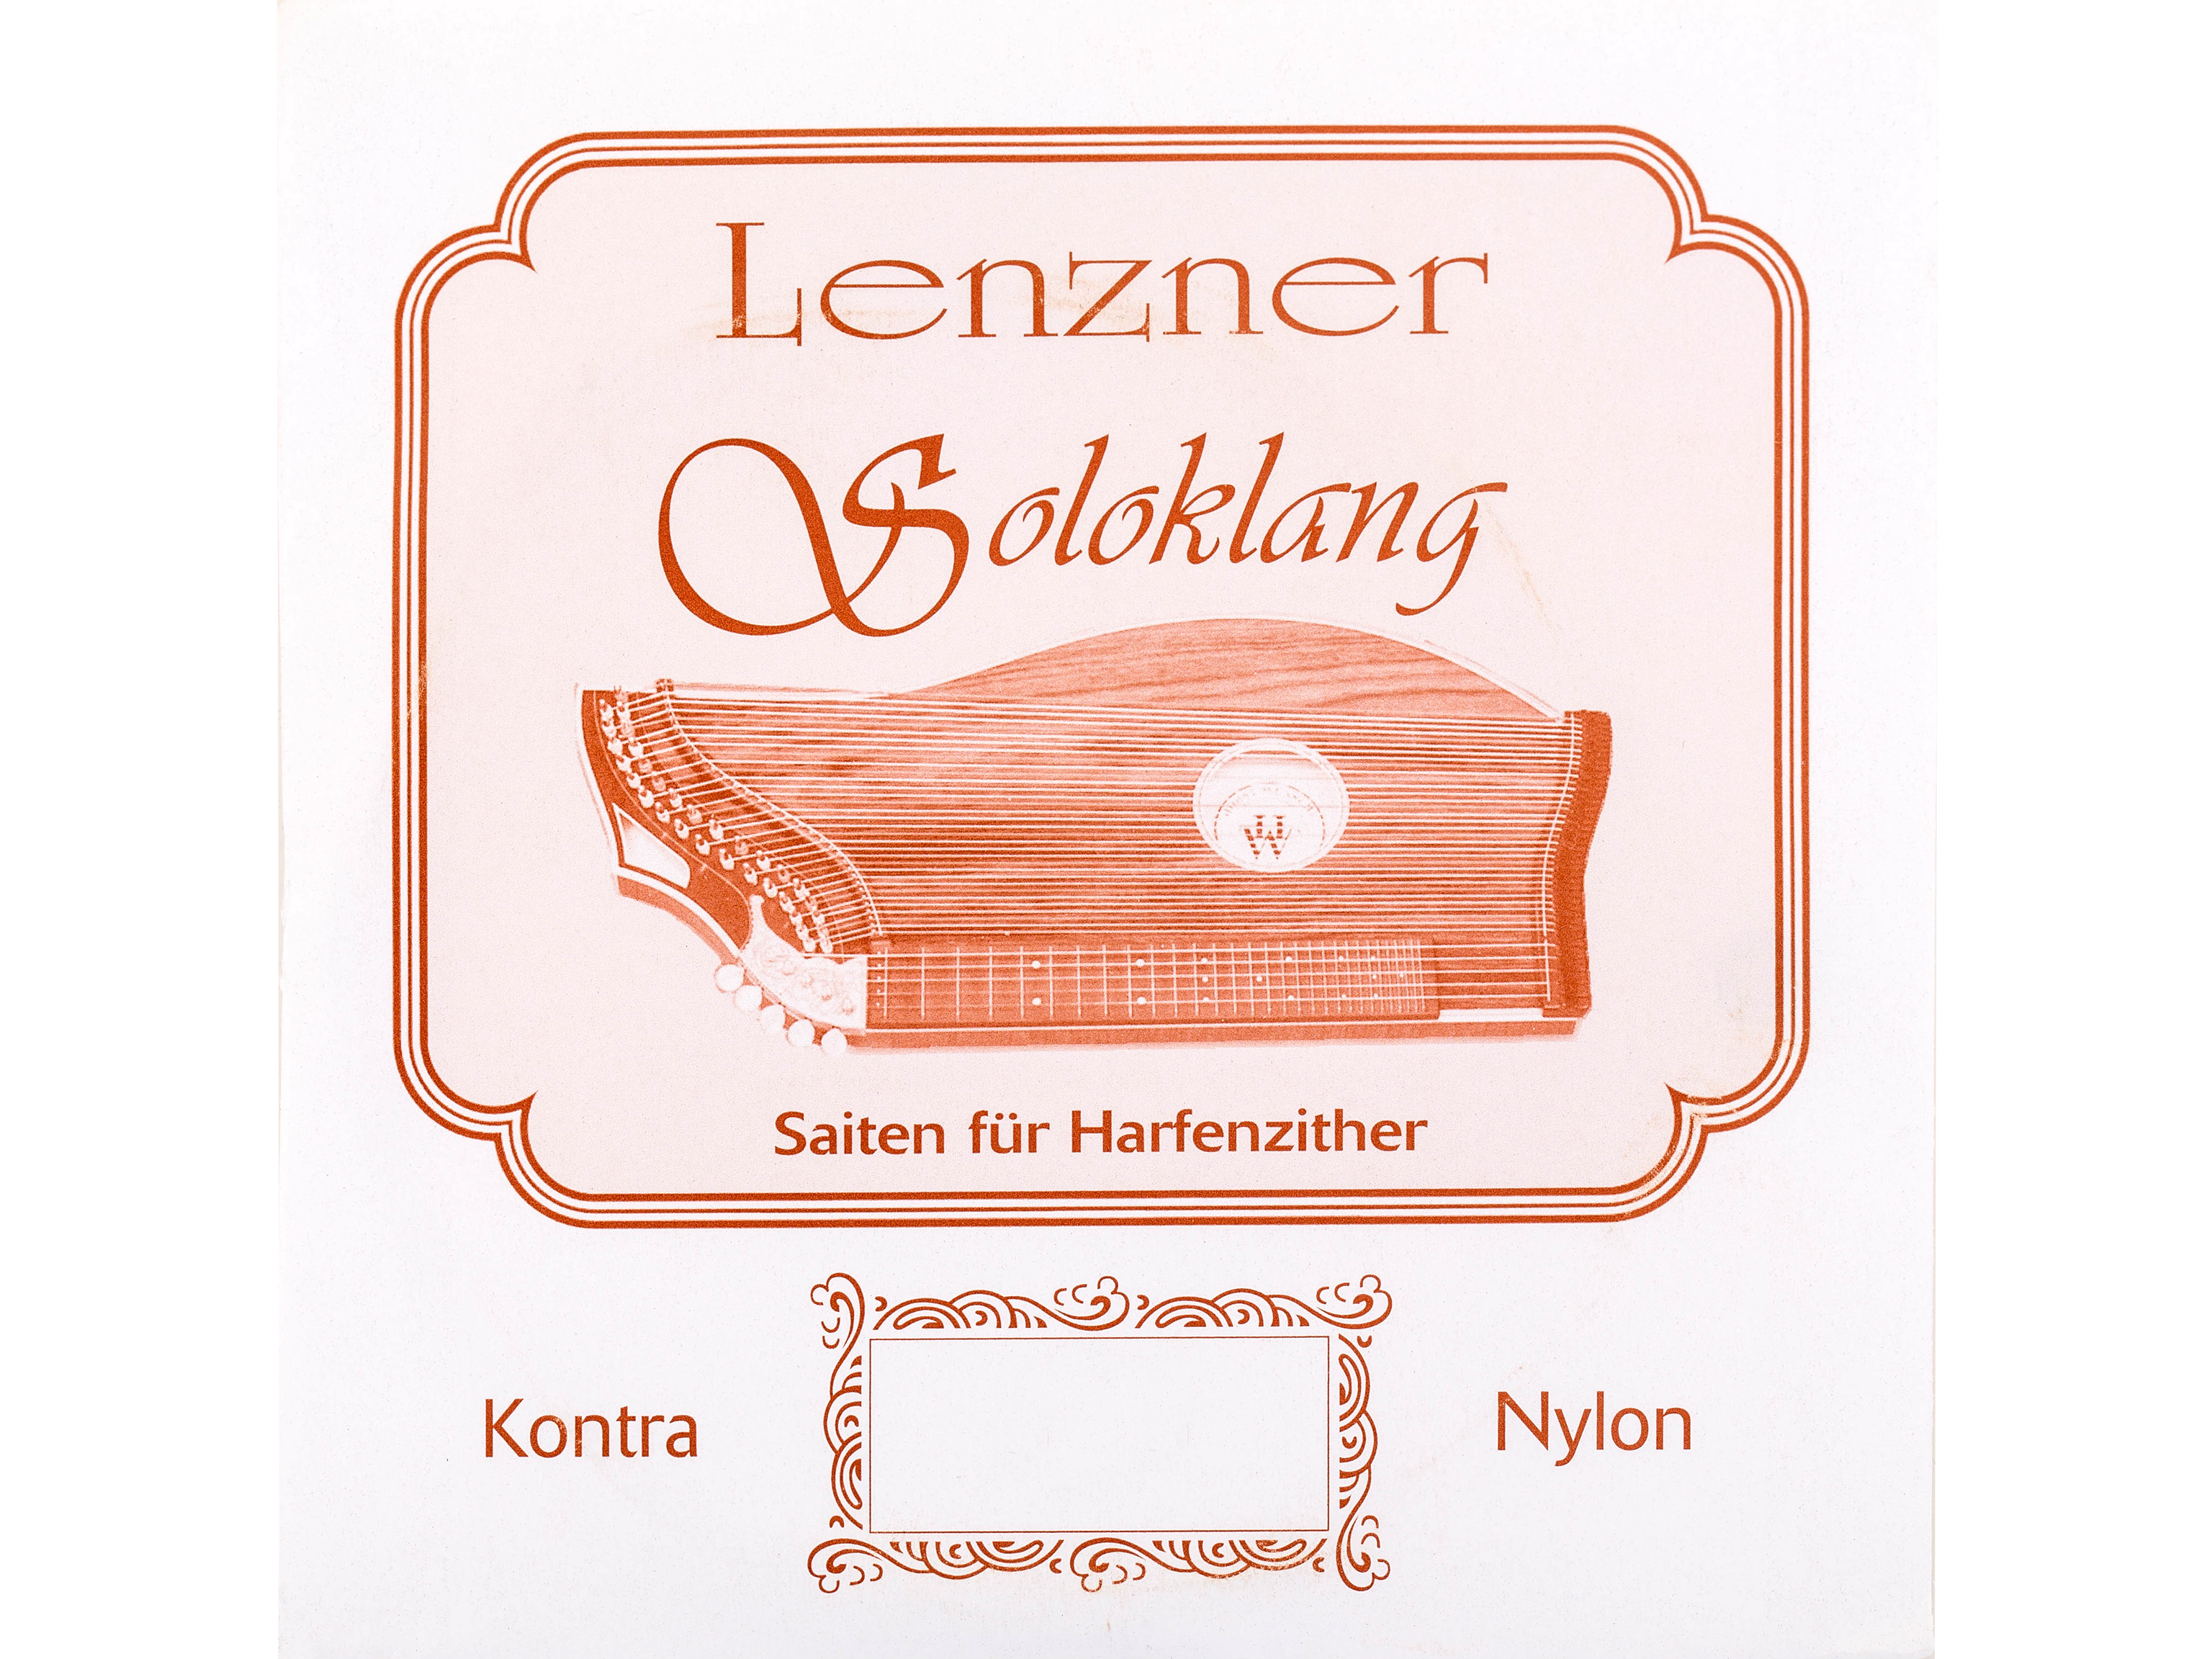 Lenzner 33. A Zithersaite Soloklang Kontra